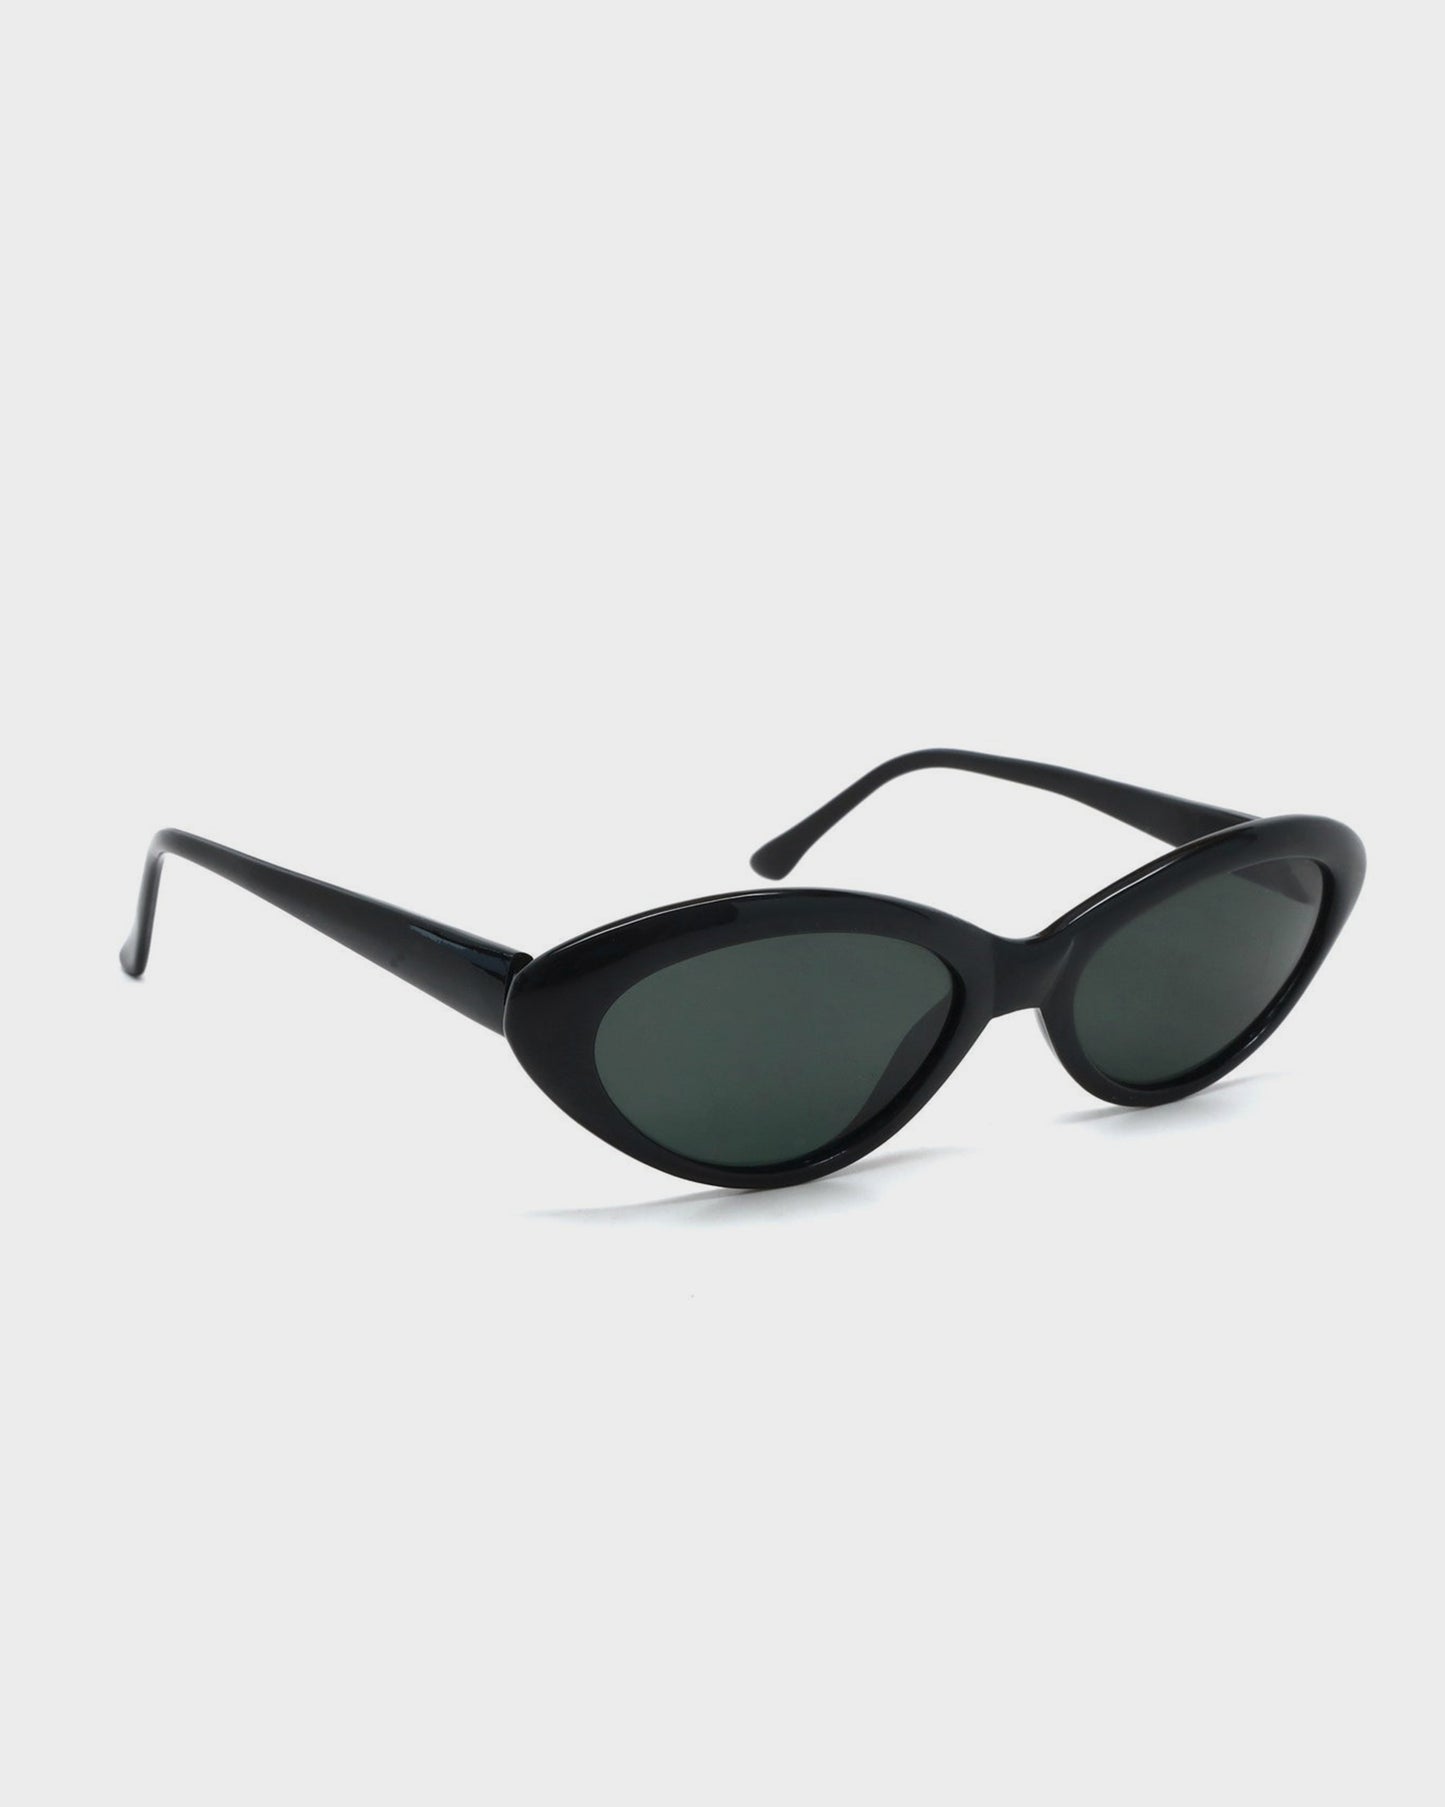 NOS 90s Cat Eye Sunglasses